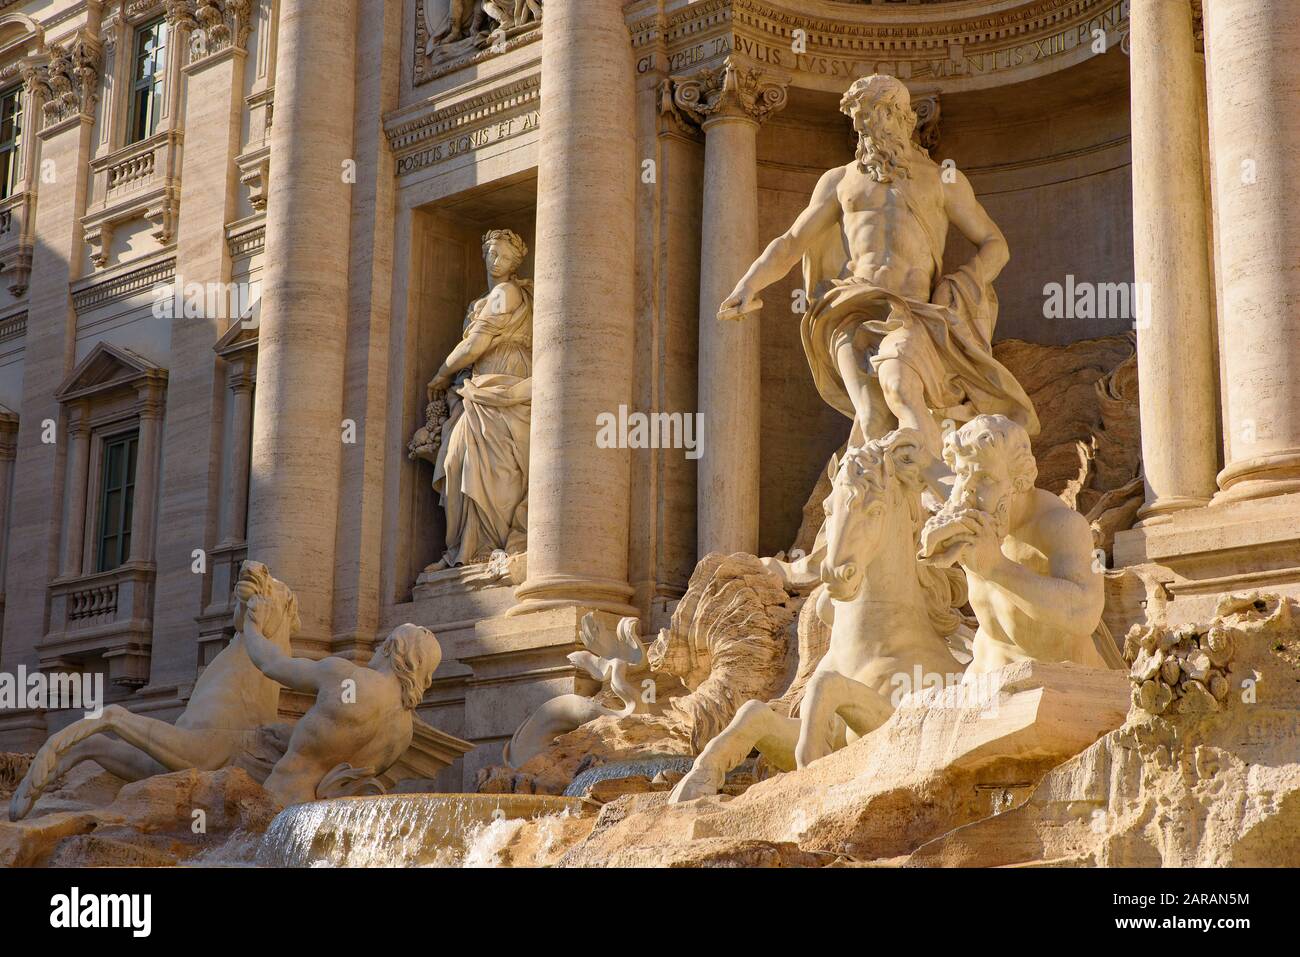 Trevi-Brunnen, einer der berühmtesten Brunnen der Welt, in Rom, Italien Stockfoto